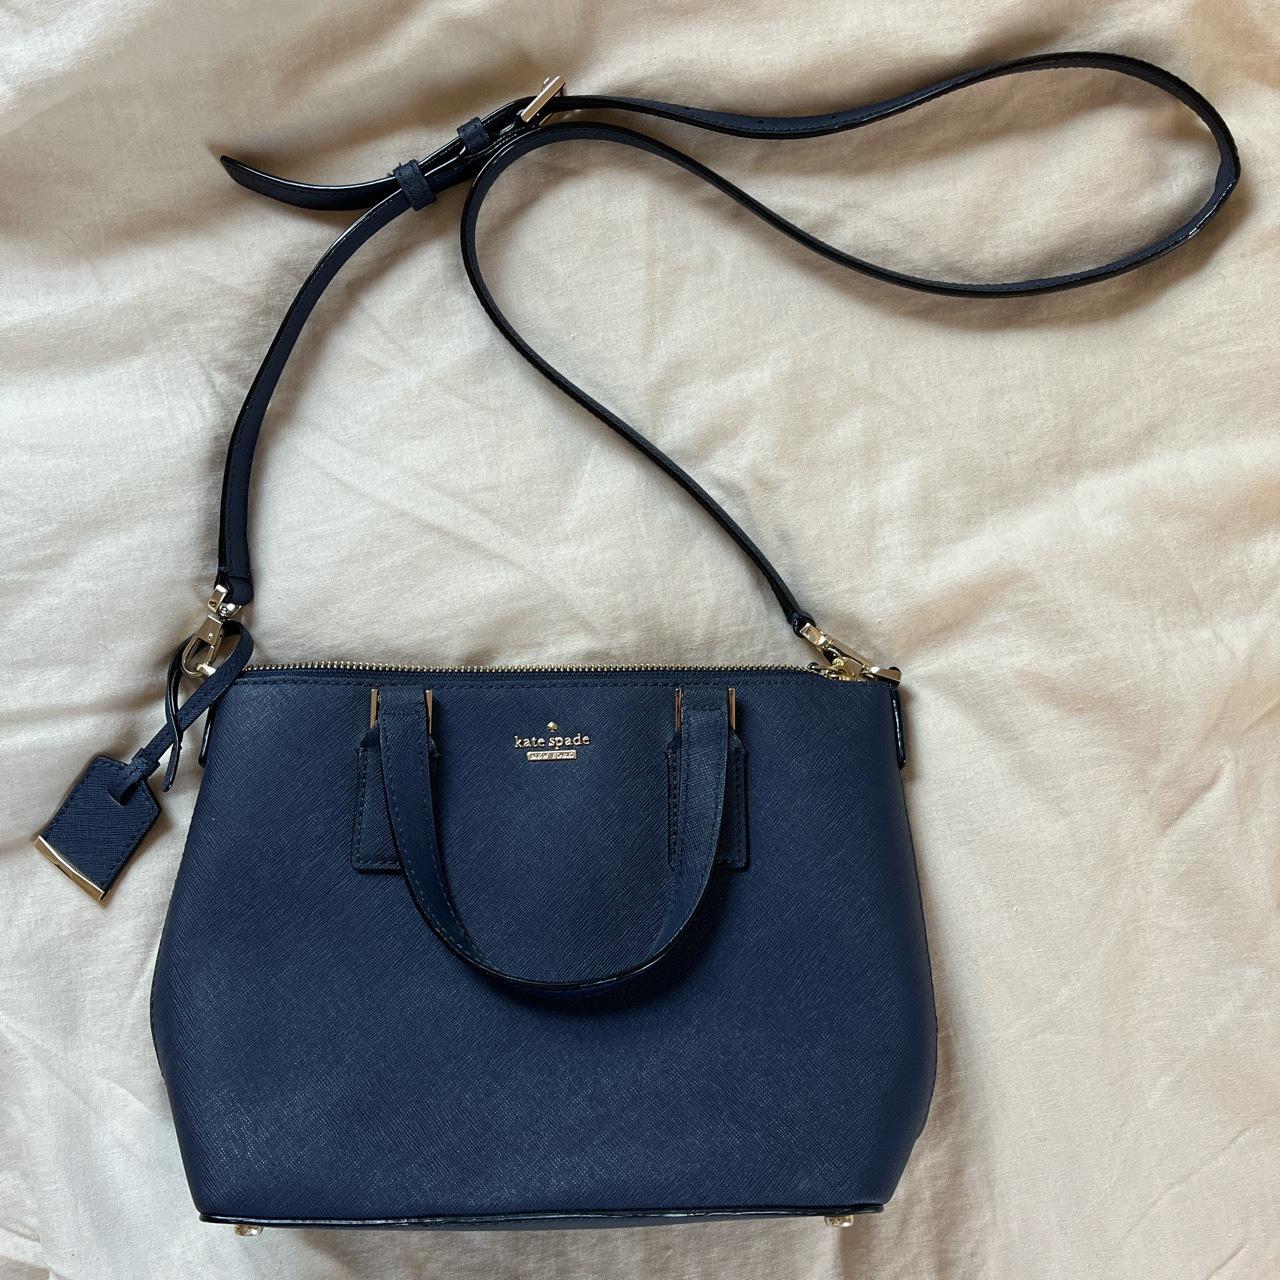 Kate Spade navy blue purse Excellent condition,... - Depop